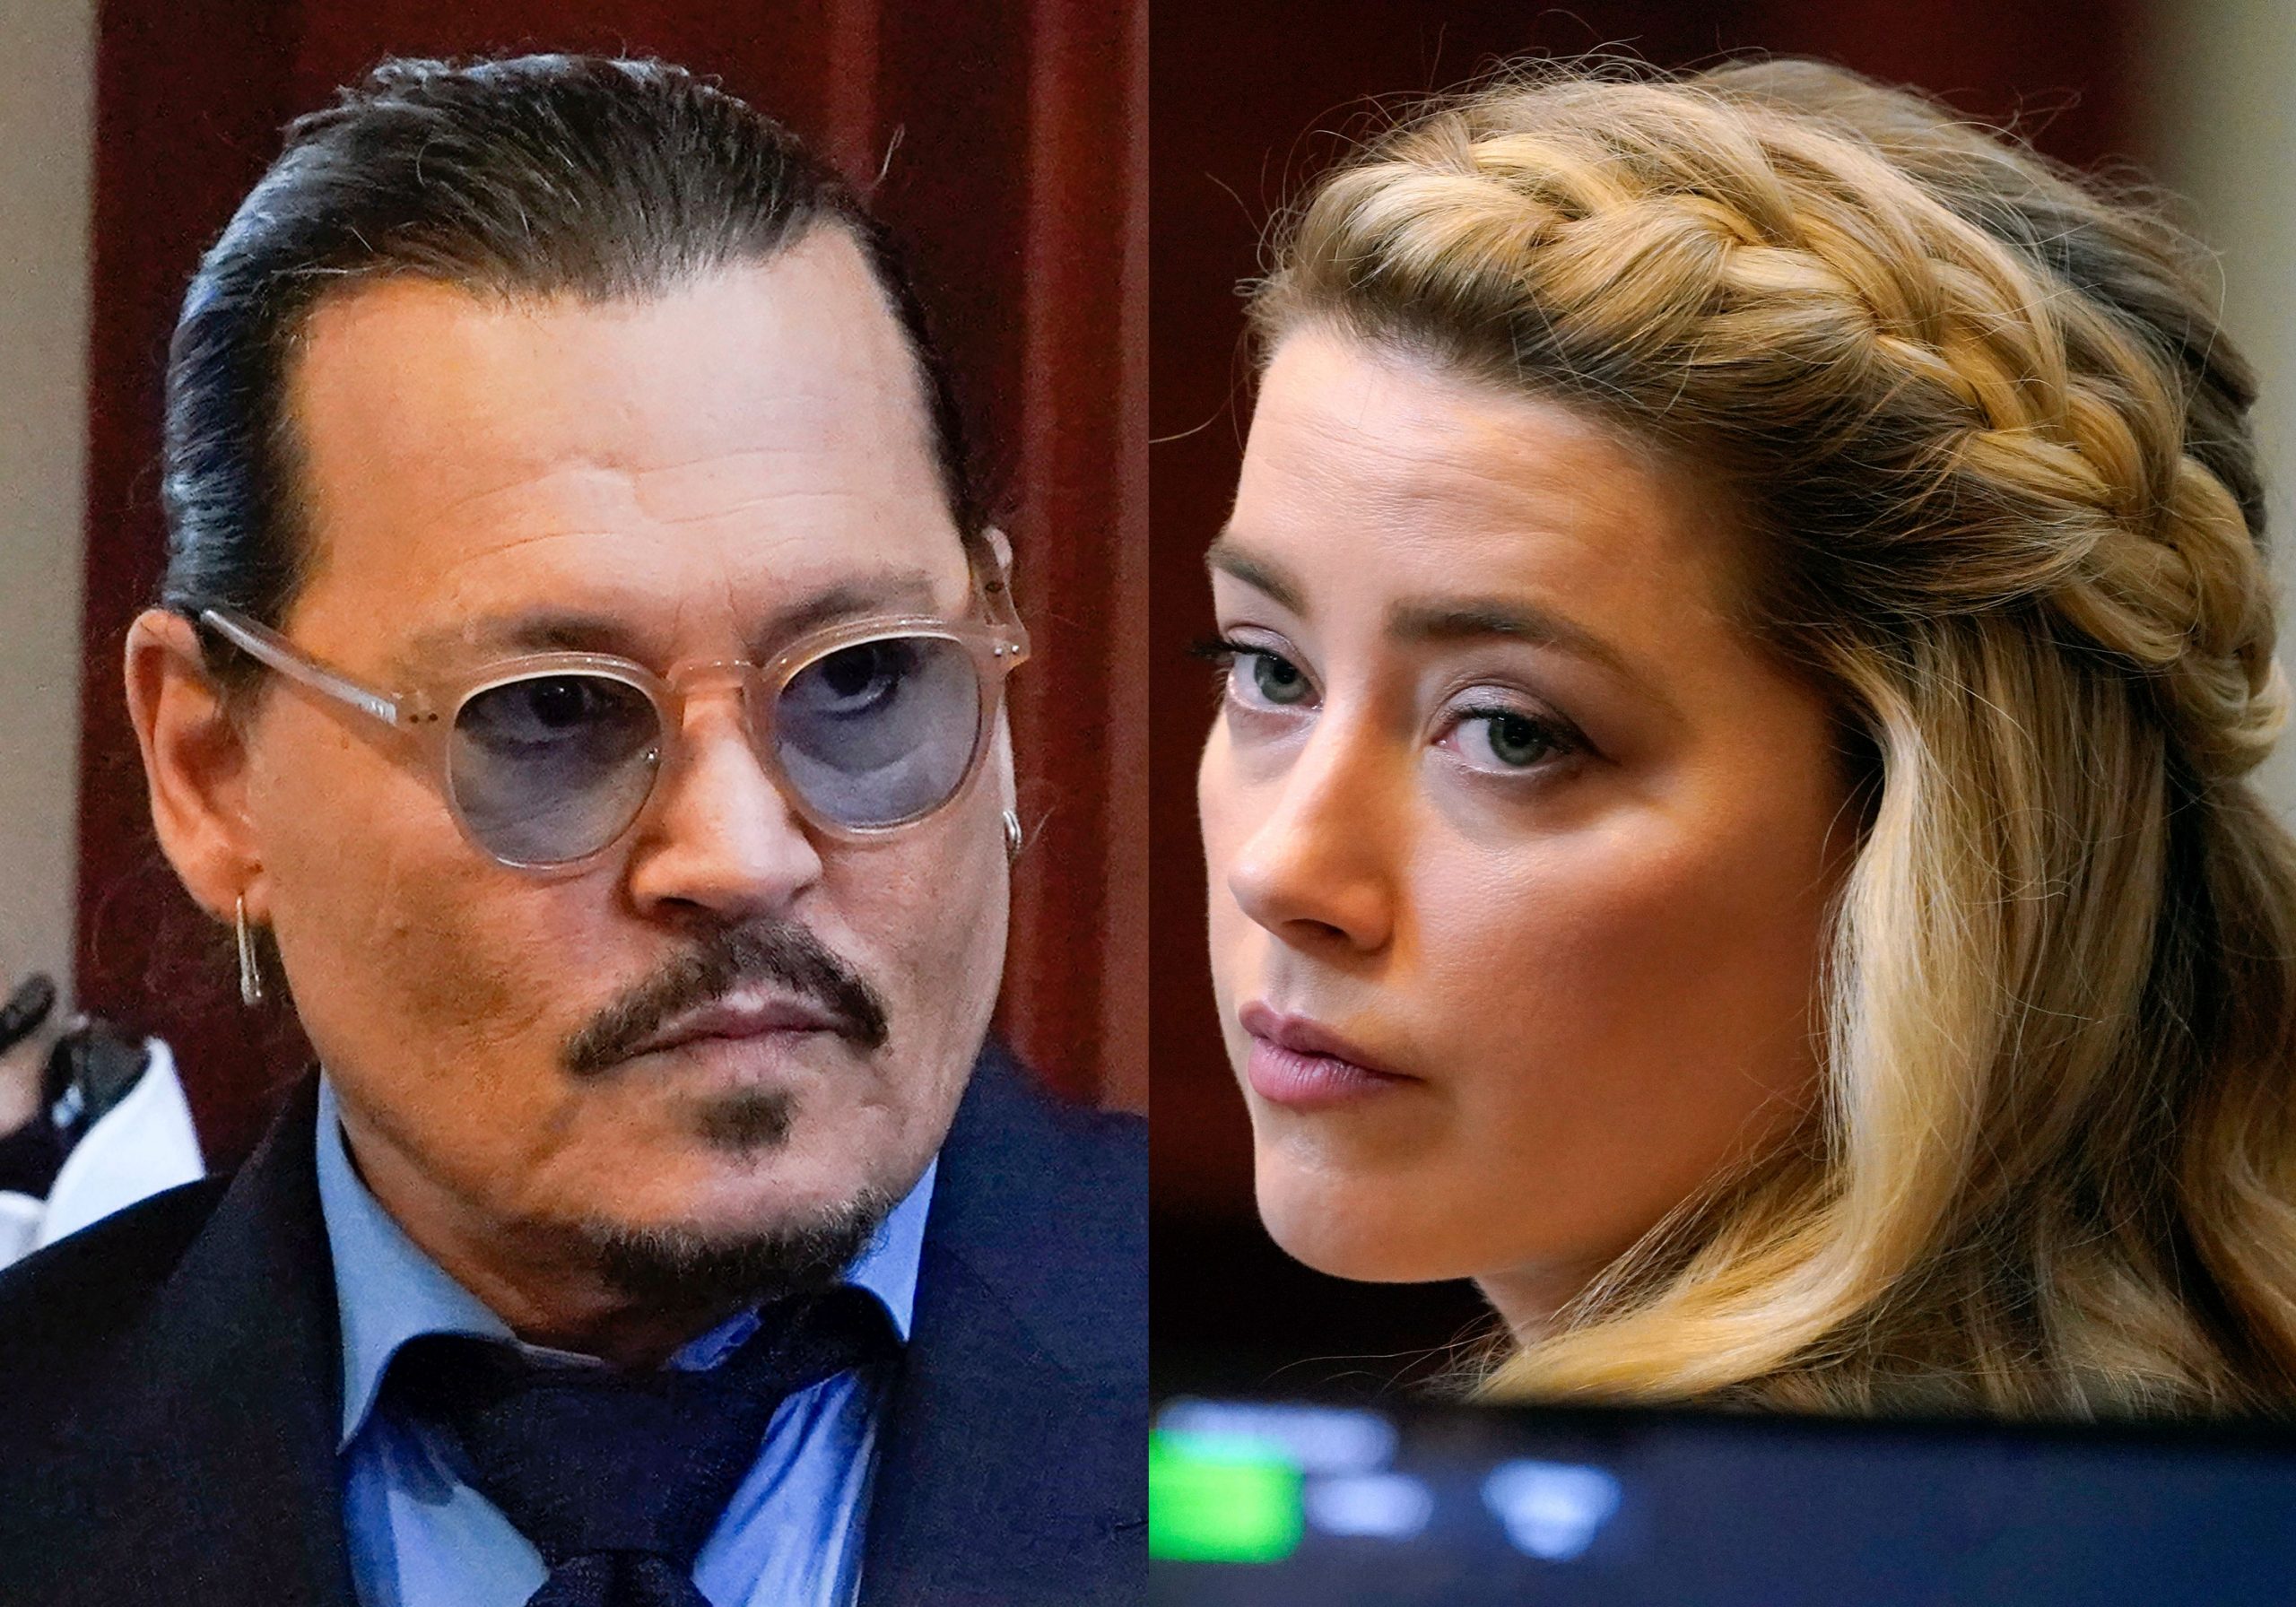 Each count the Depp-Heard jurors considered